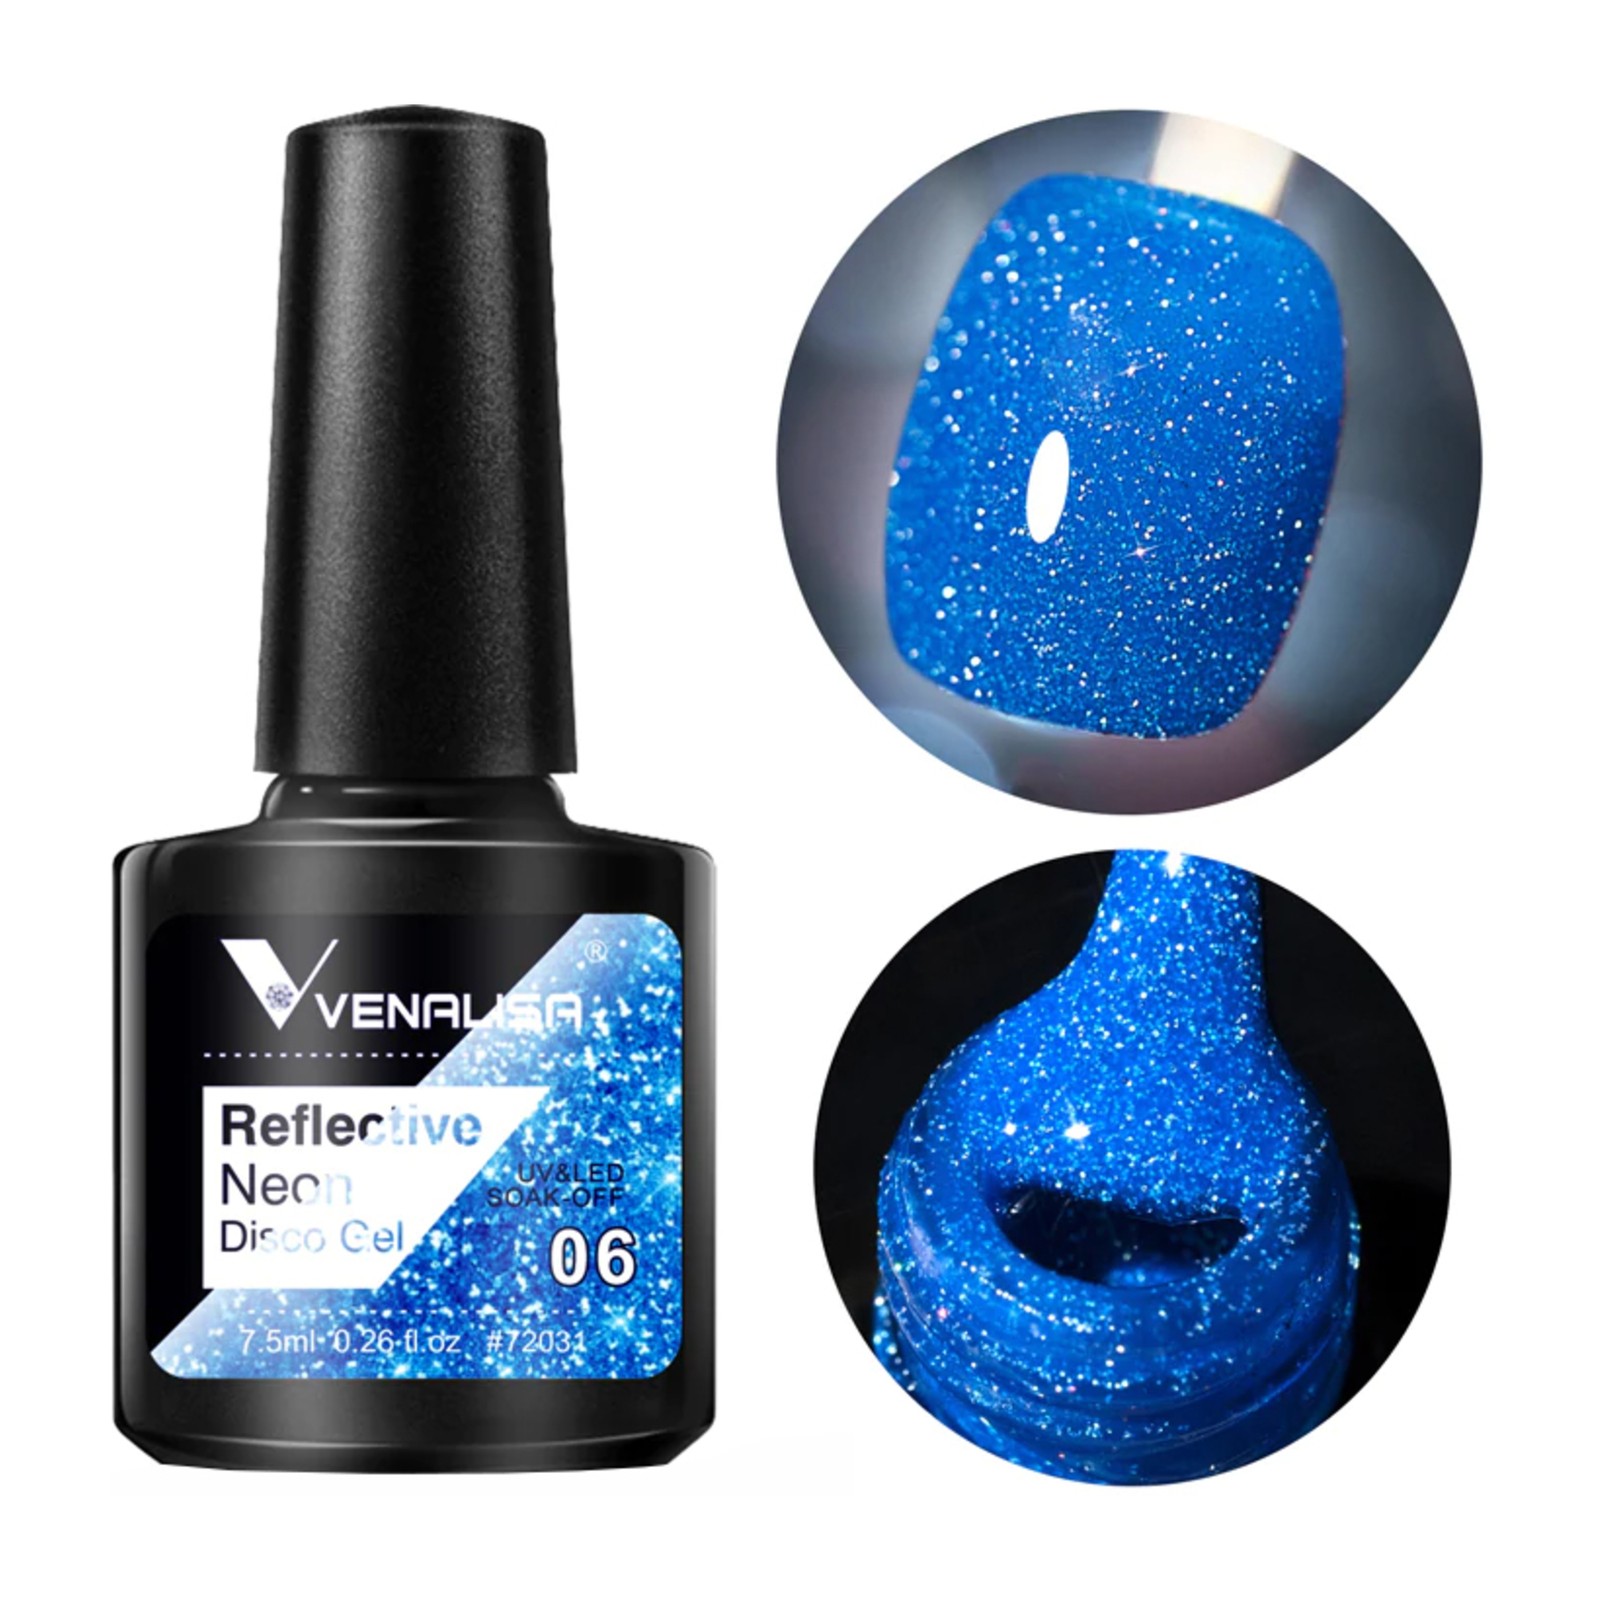 Venalisa - Reflective Neon Disco Gel - BD06